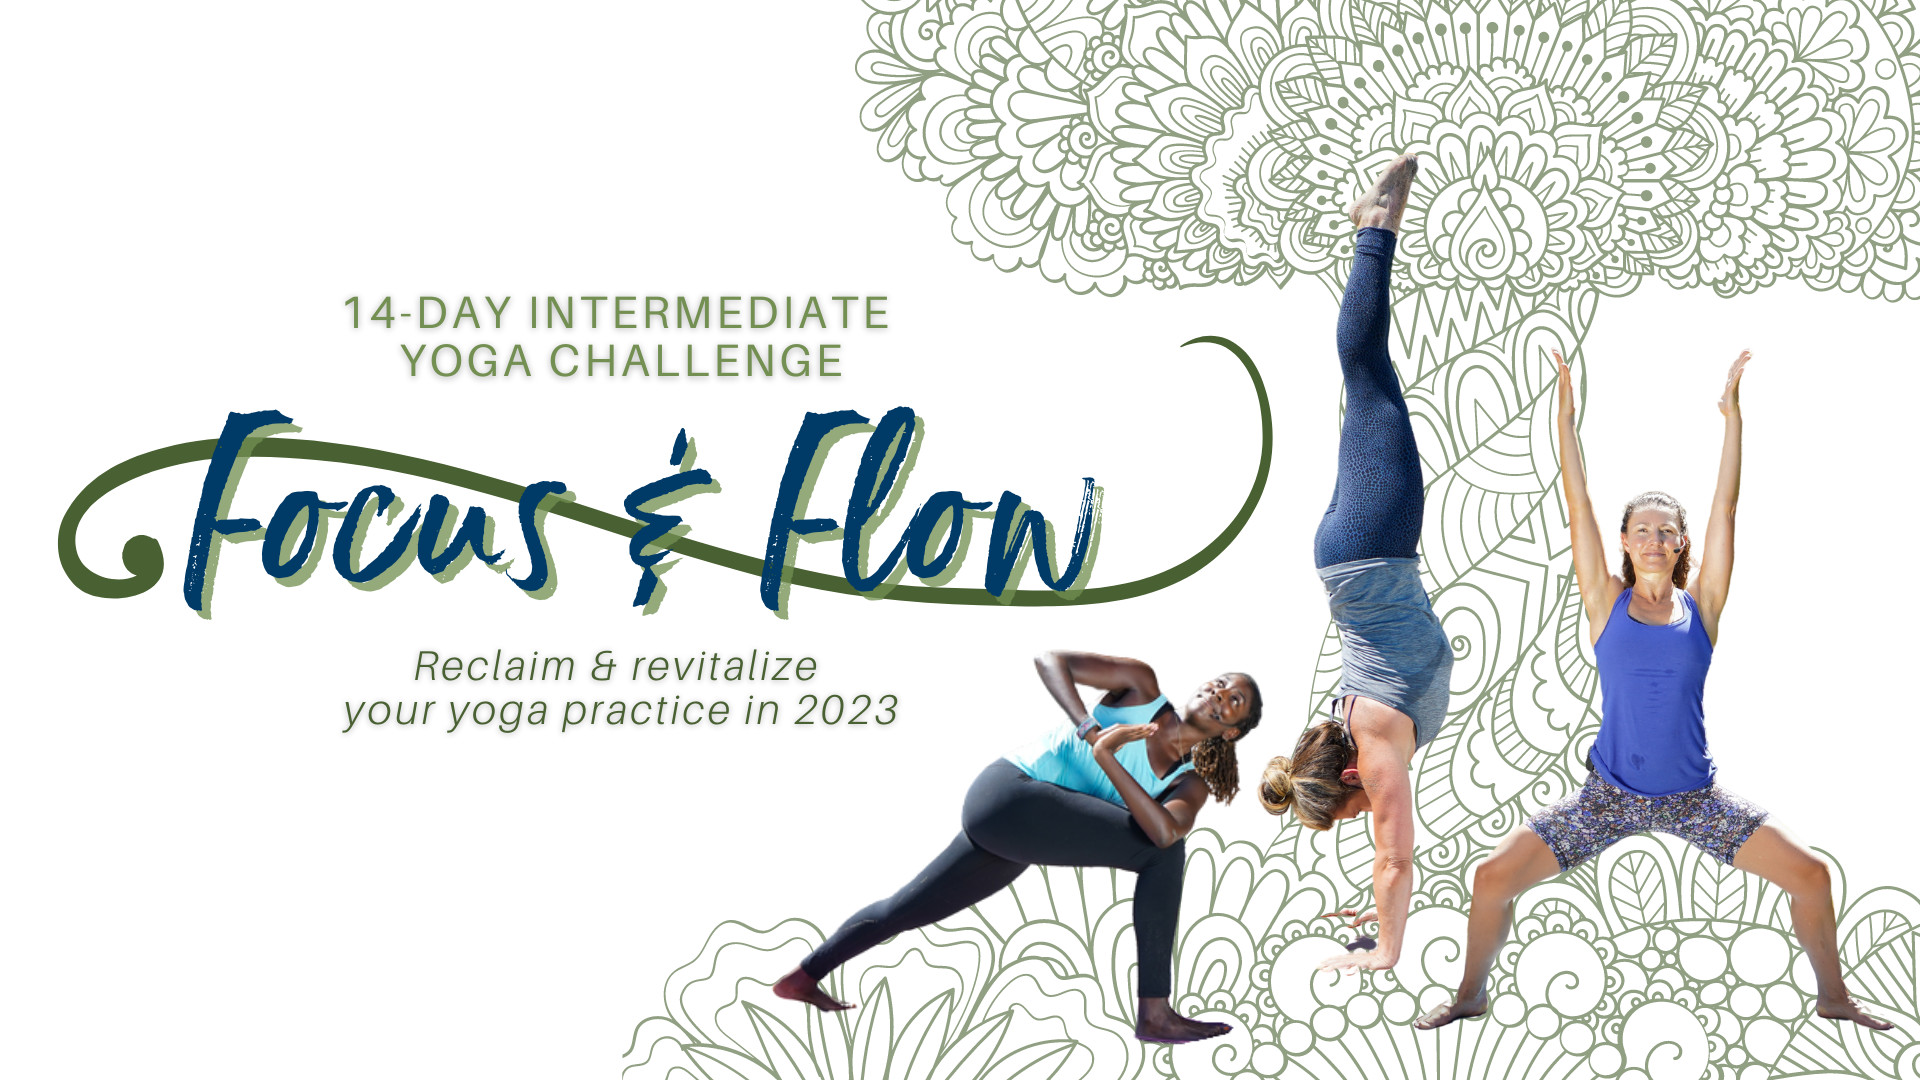 The 2023 Focus & Flow Intermediate Yoga Challenge